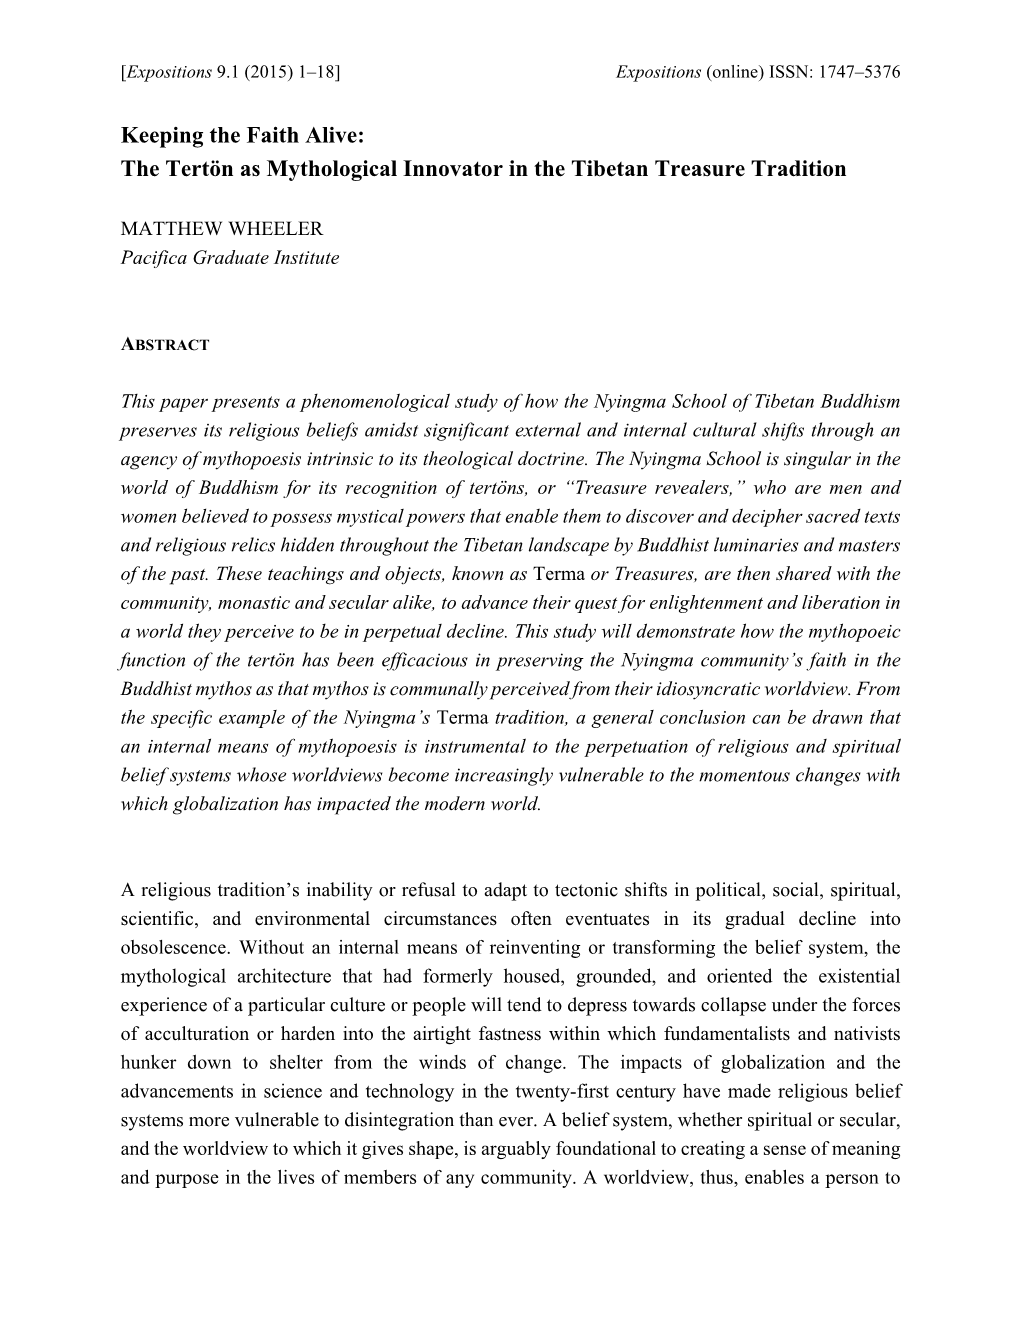 The Tertön As Mythological Innovator in the Tibetan Treasure Tradition